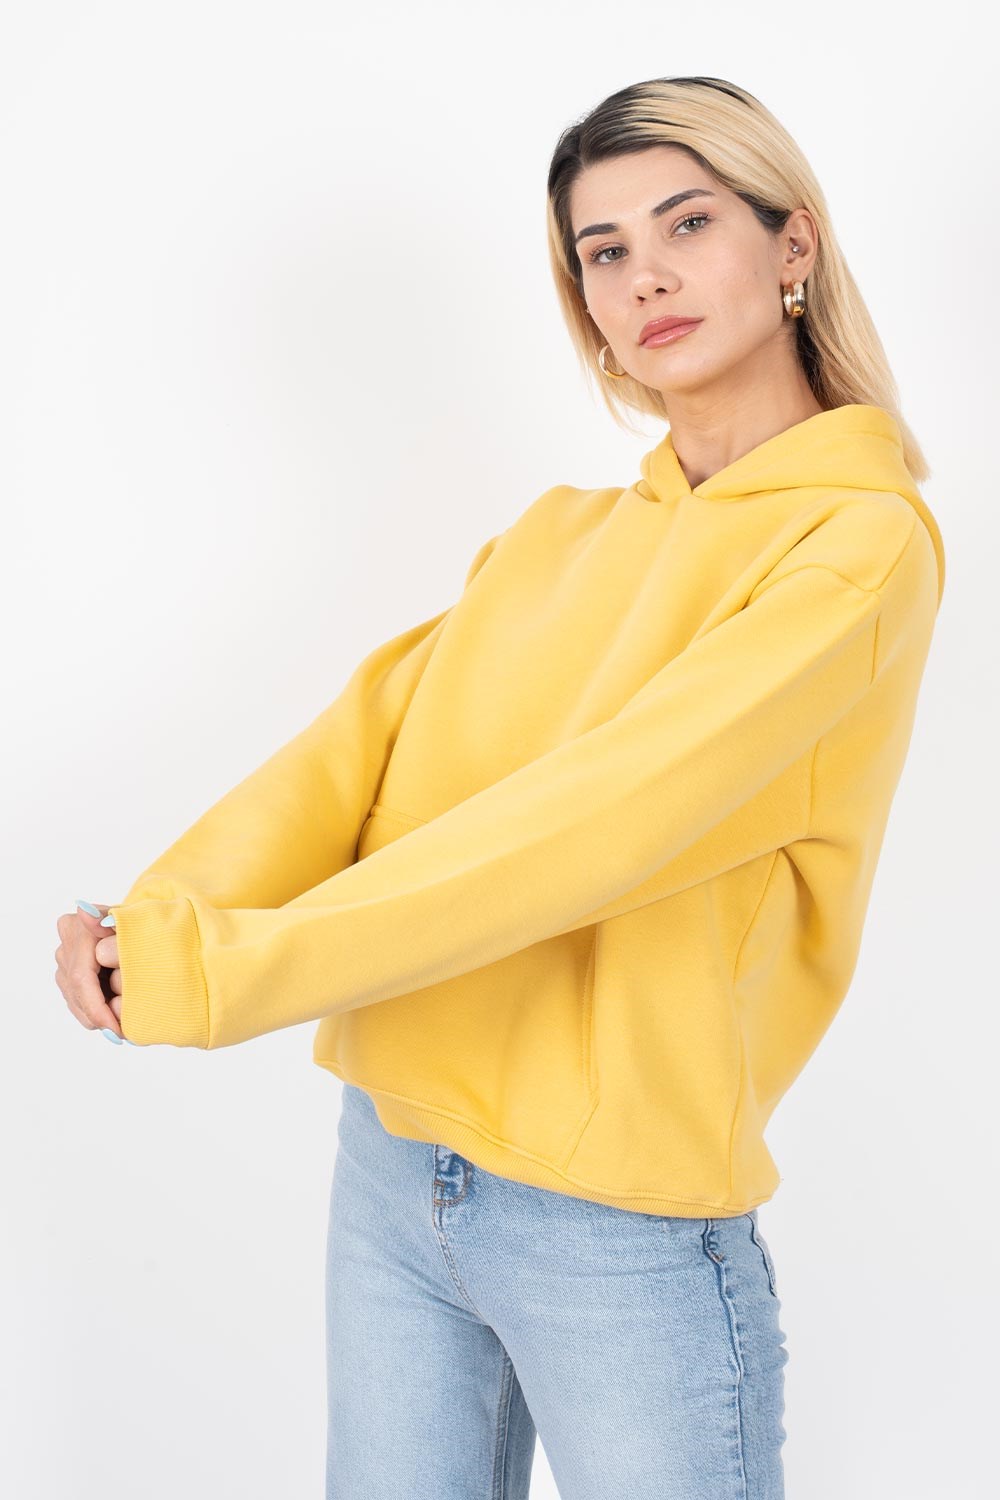 Kadın Hardal Sarısı Kapüşonlu Sweatshirt | Pranga Giyim